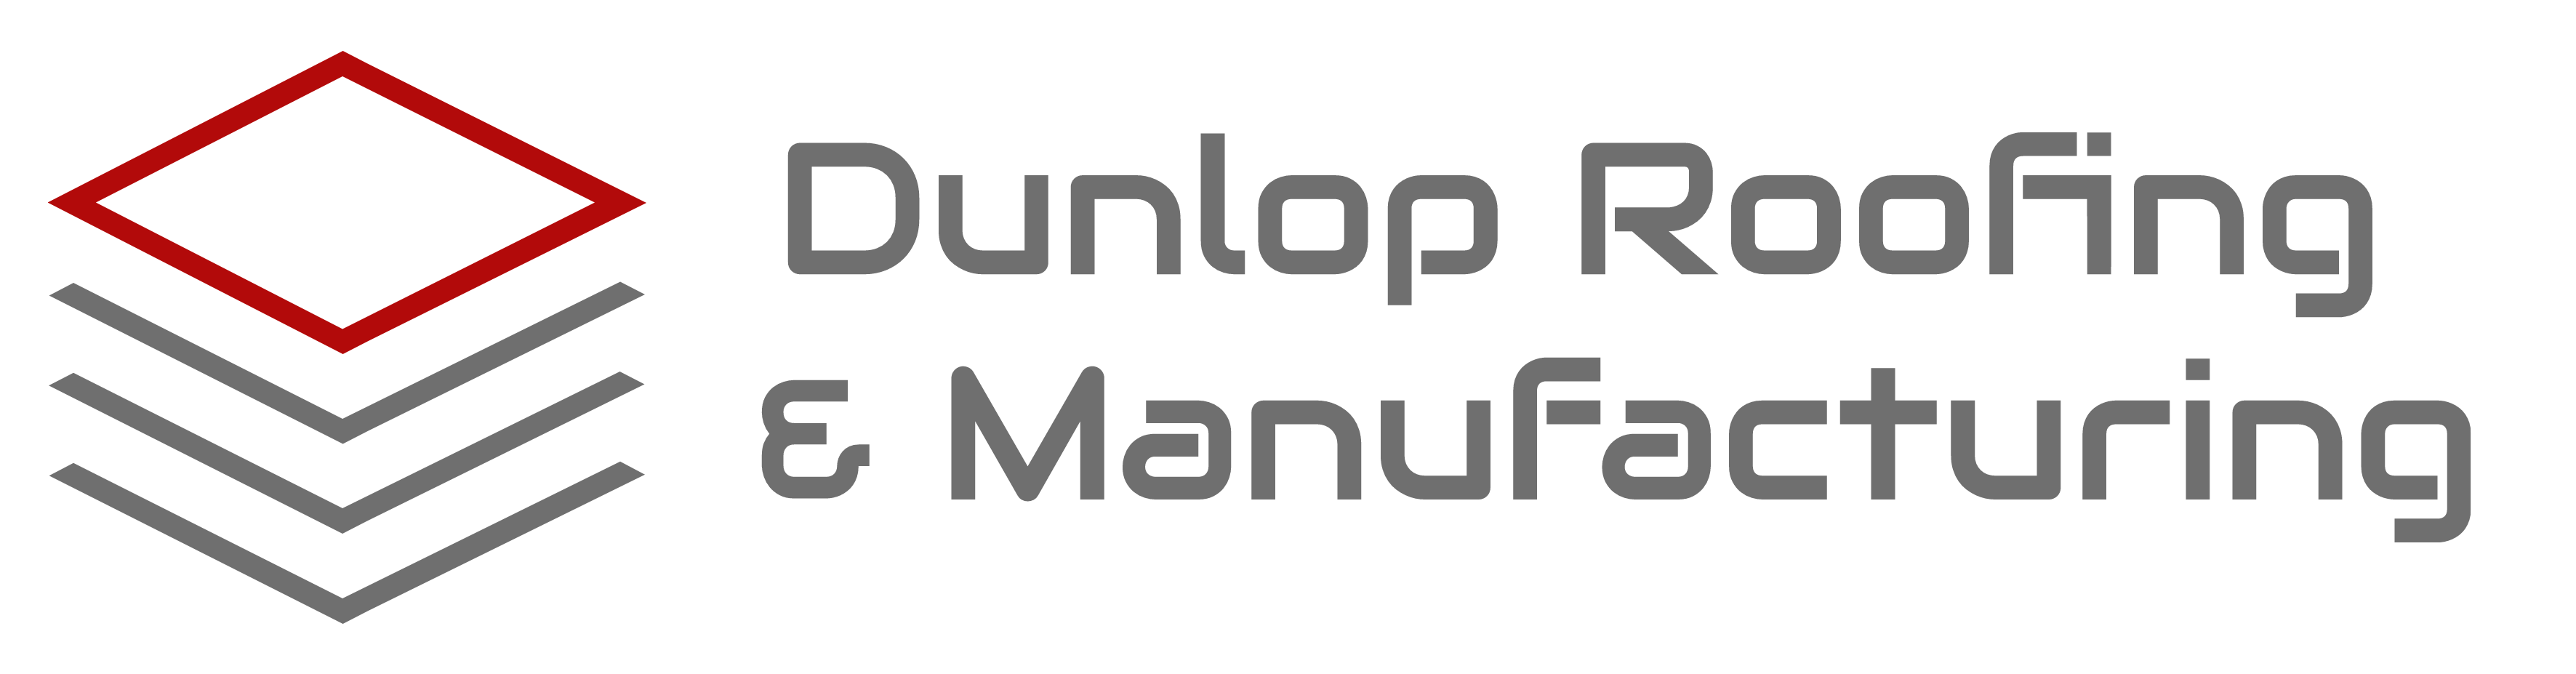 Dunlop Roofing Logo